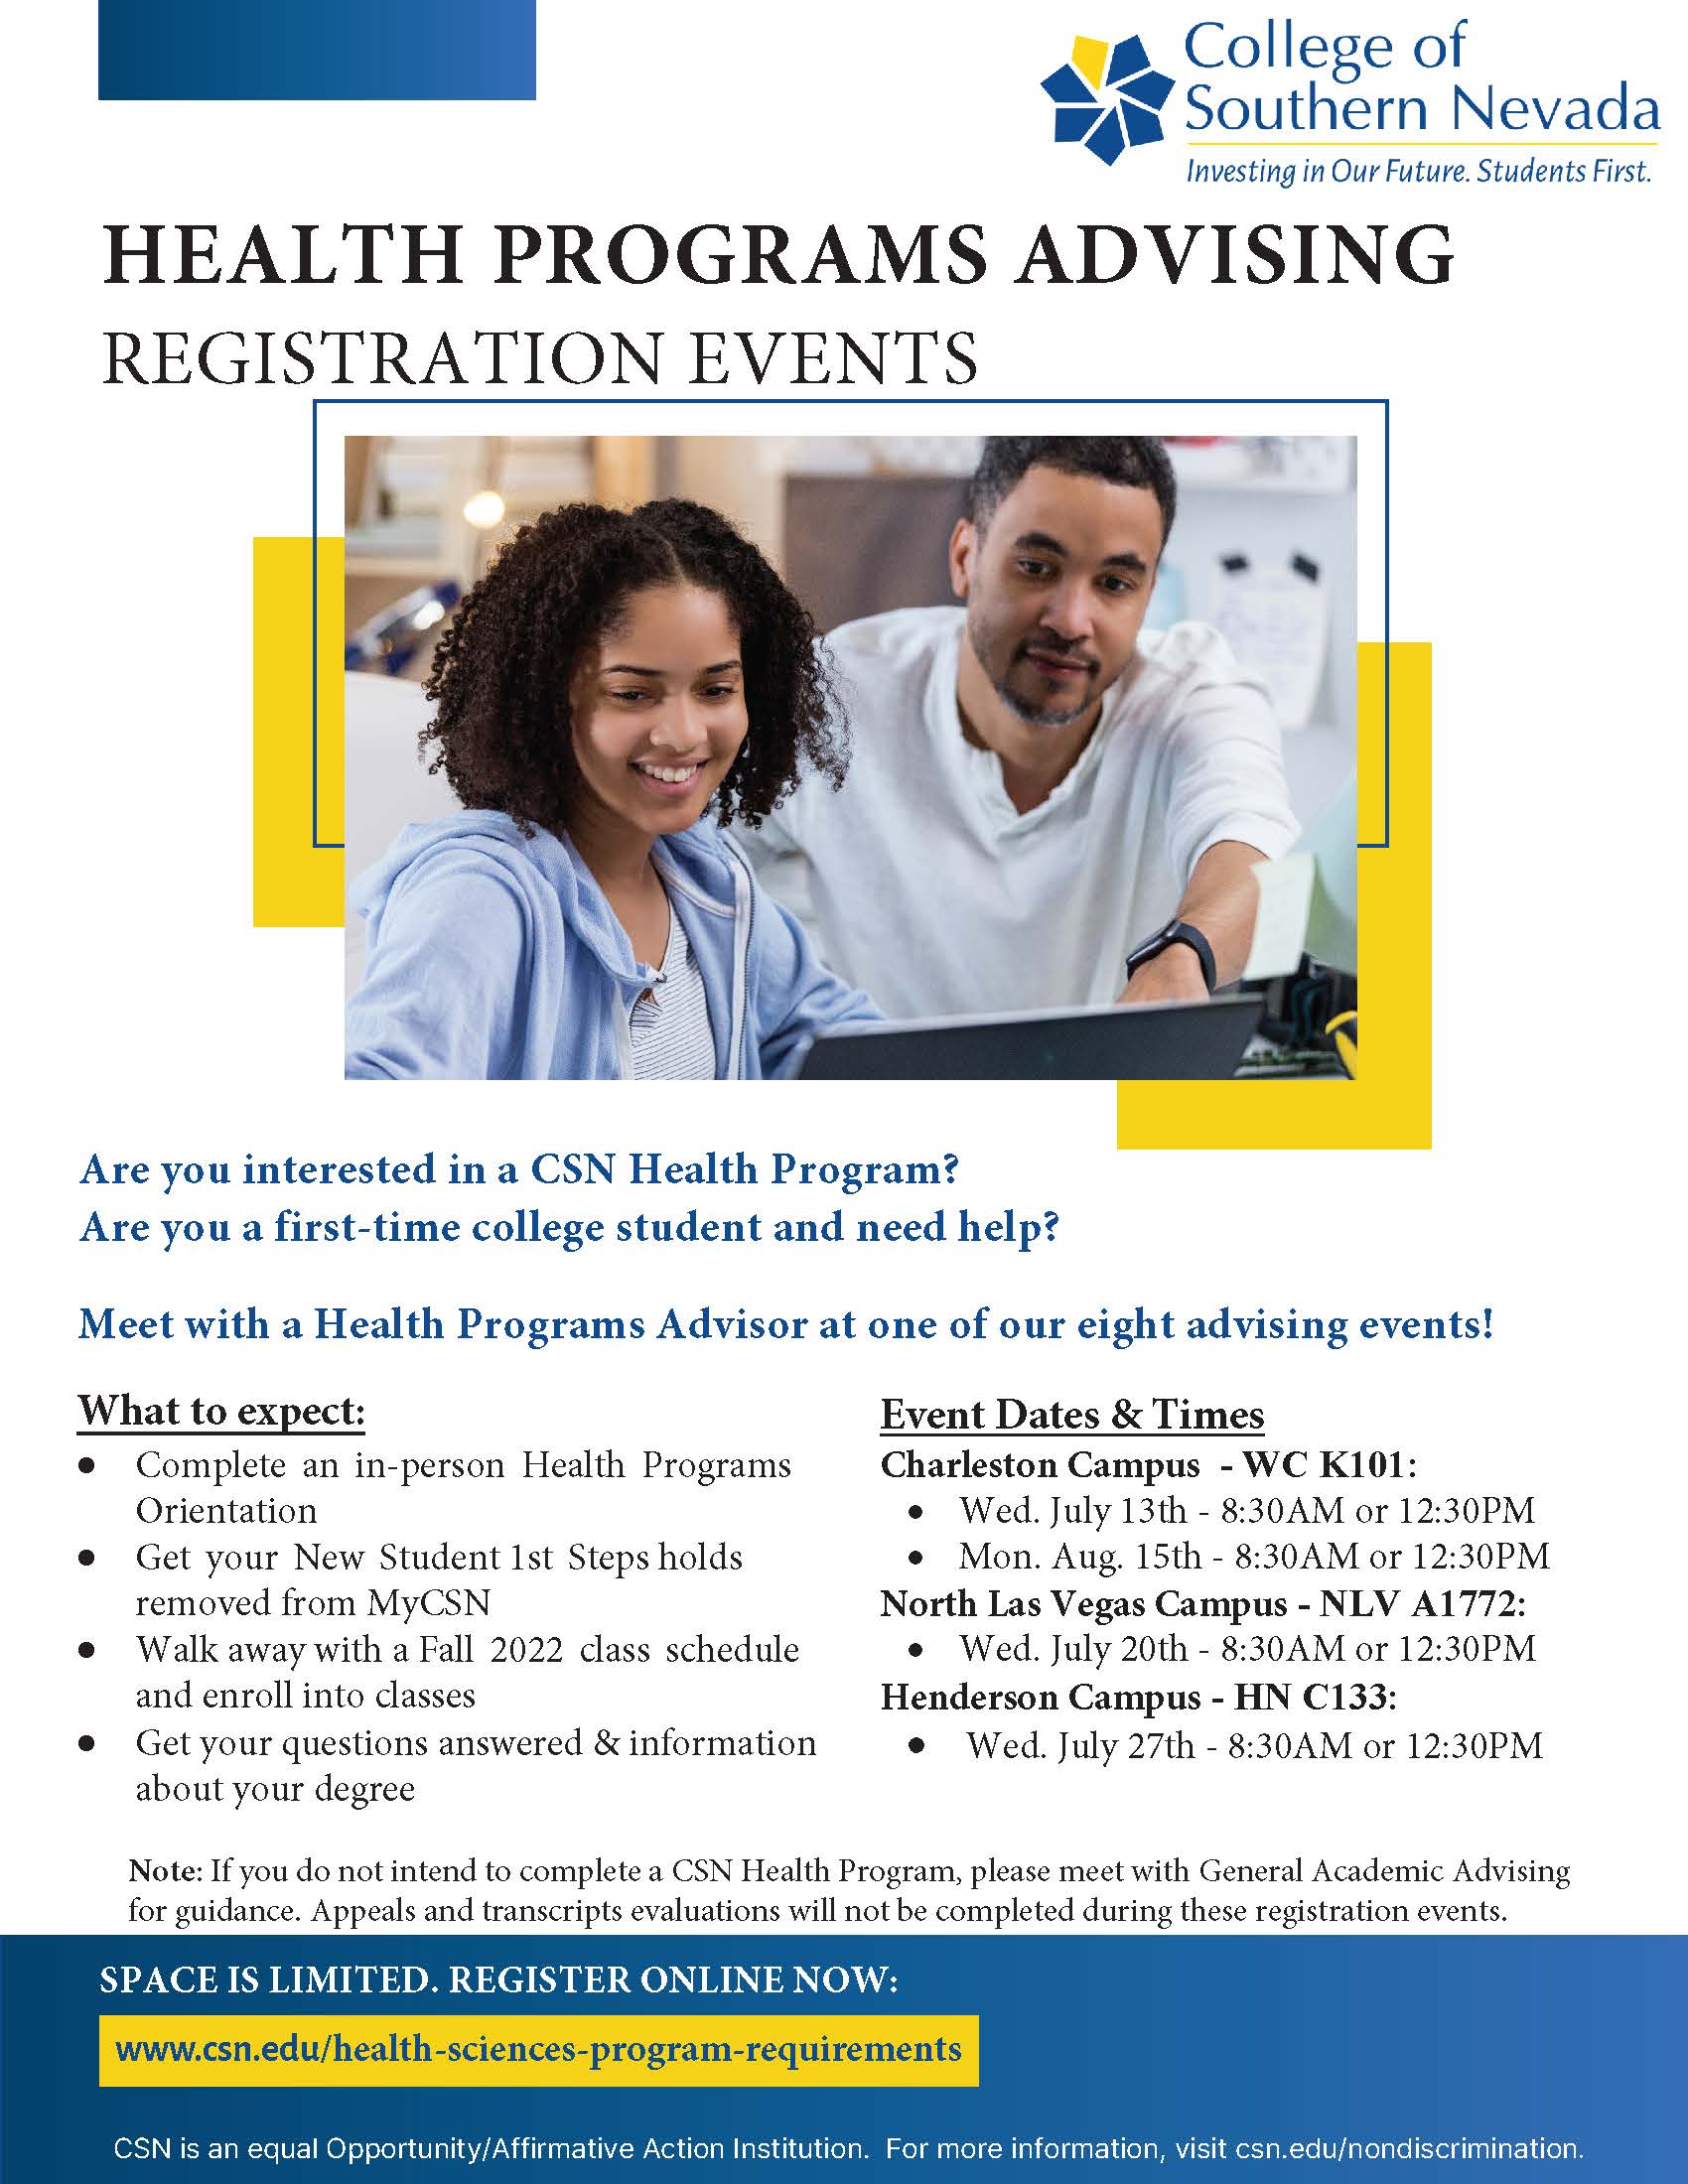 Event flyer highlighting dates for Health Programs Advising Registration Events 